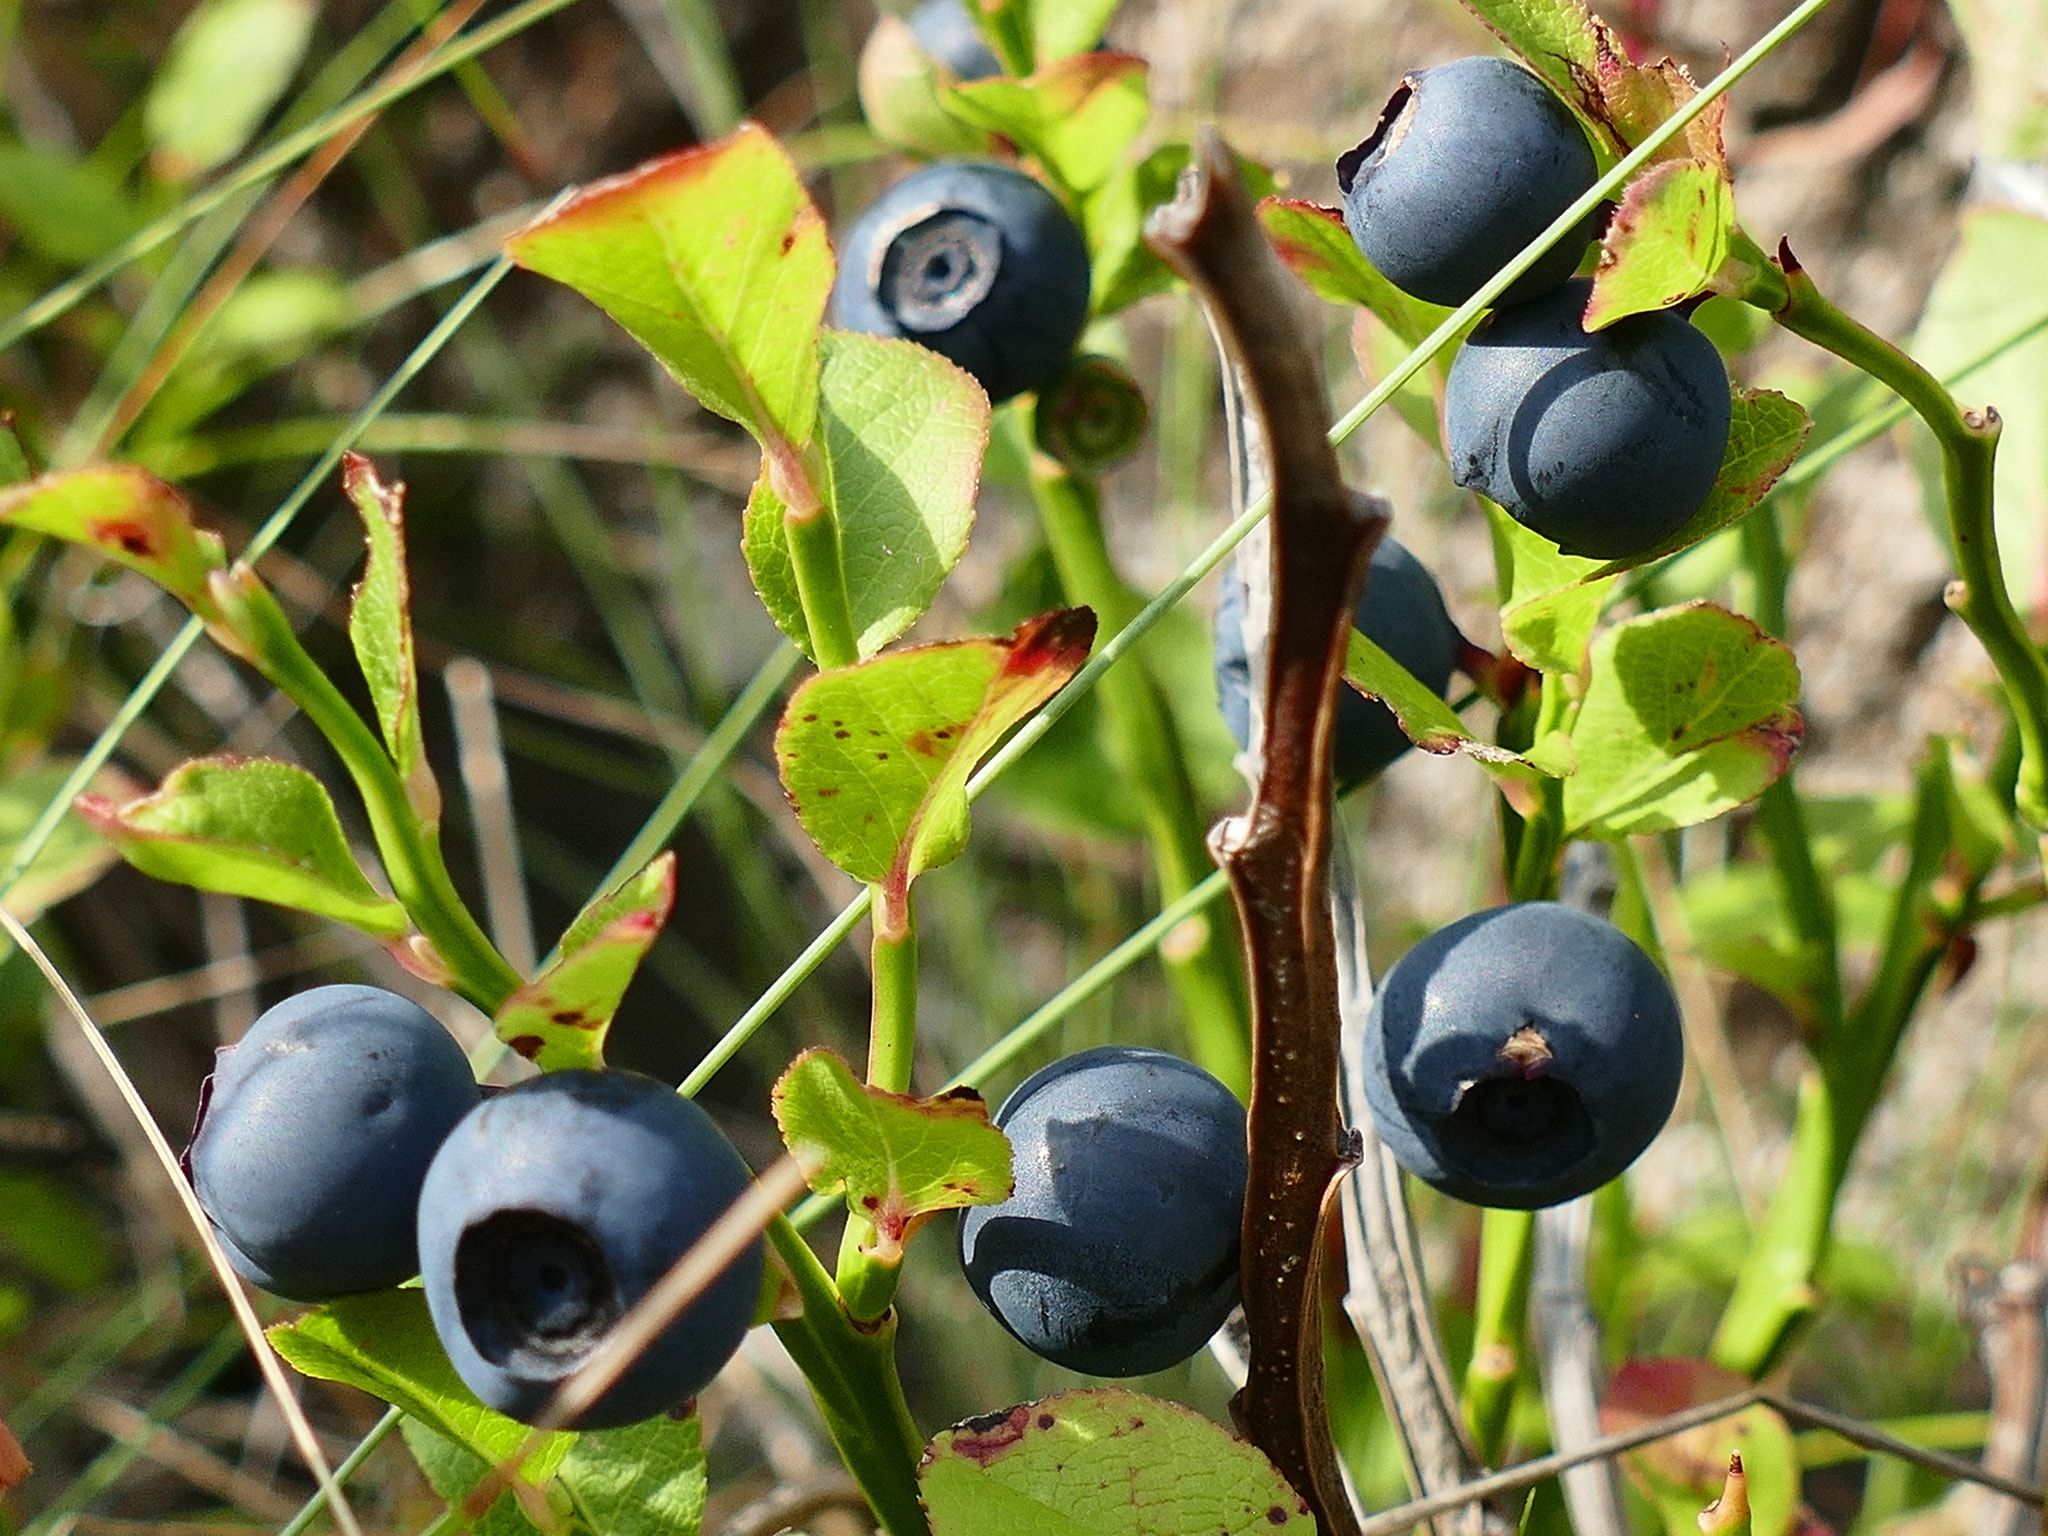 Puka blueberries, July 2021, credit Ilir Shyti